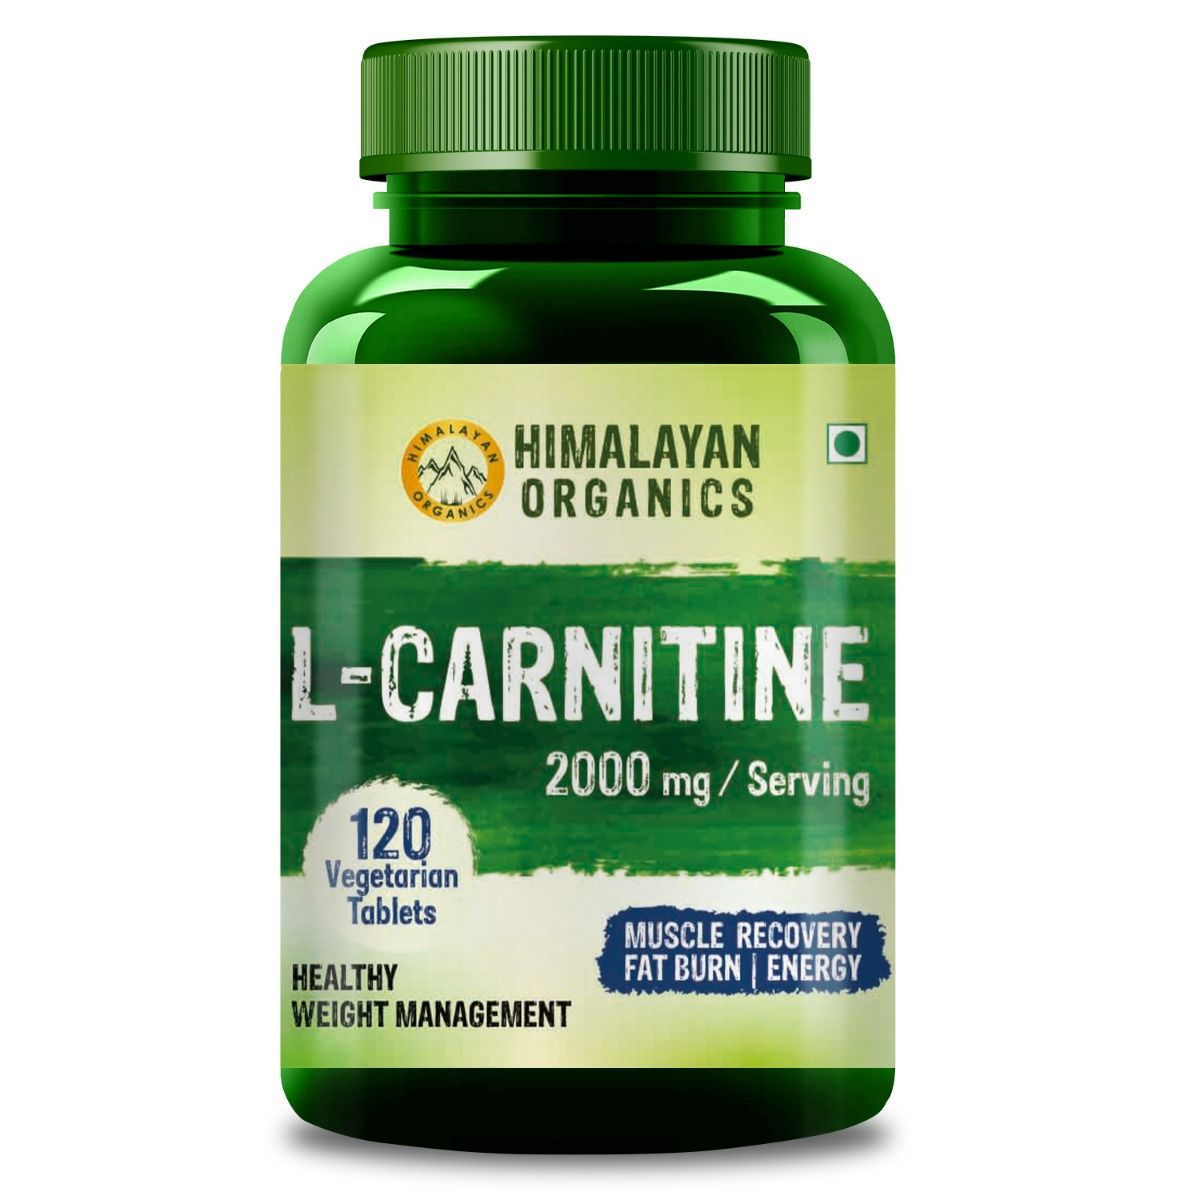 Himalayan Organics L-Carnitine 2000 mg, 120 Tablets, Pack of 1 